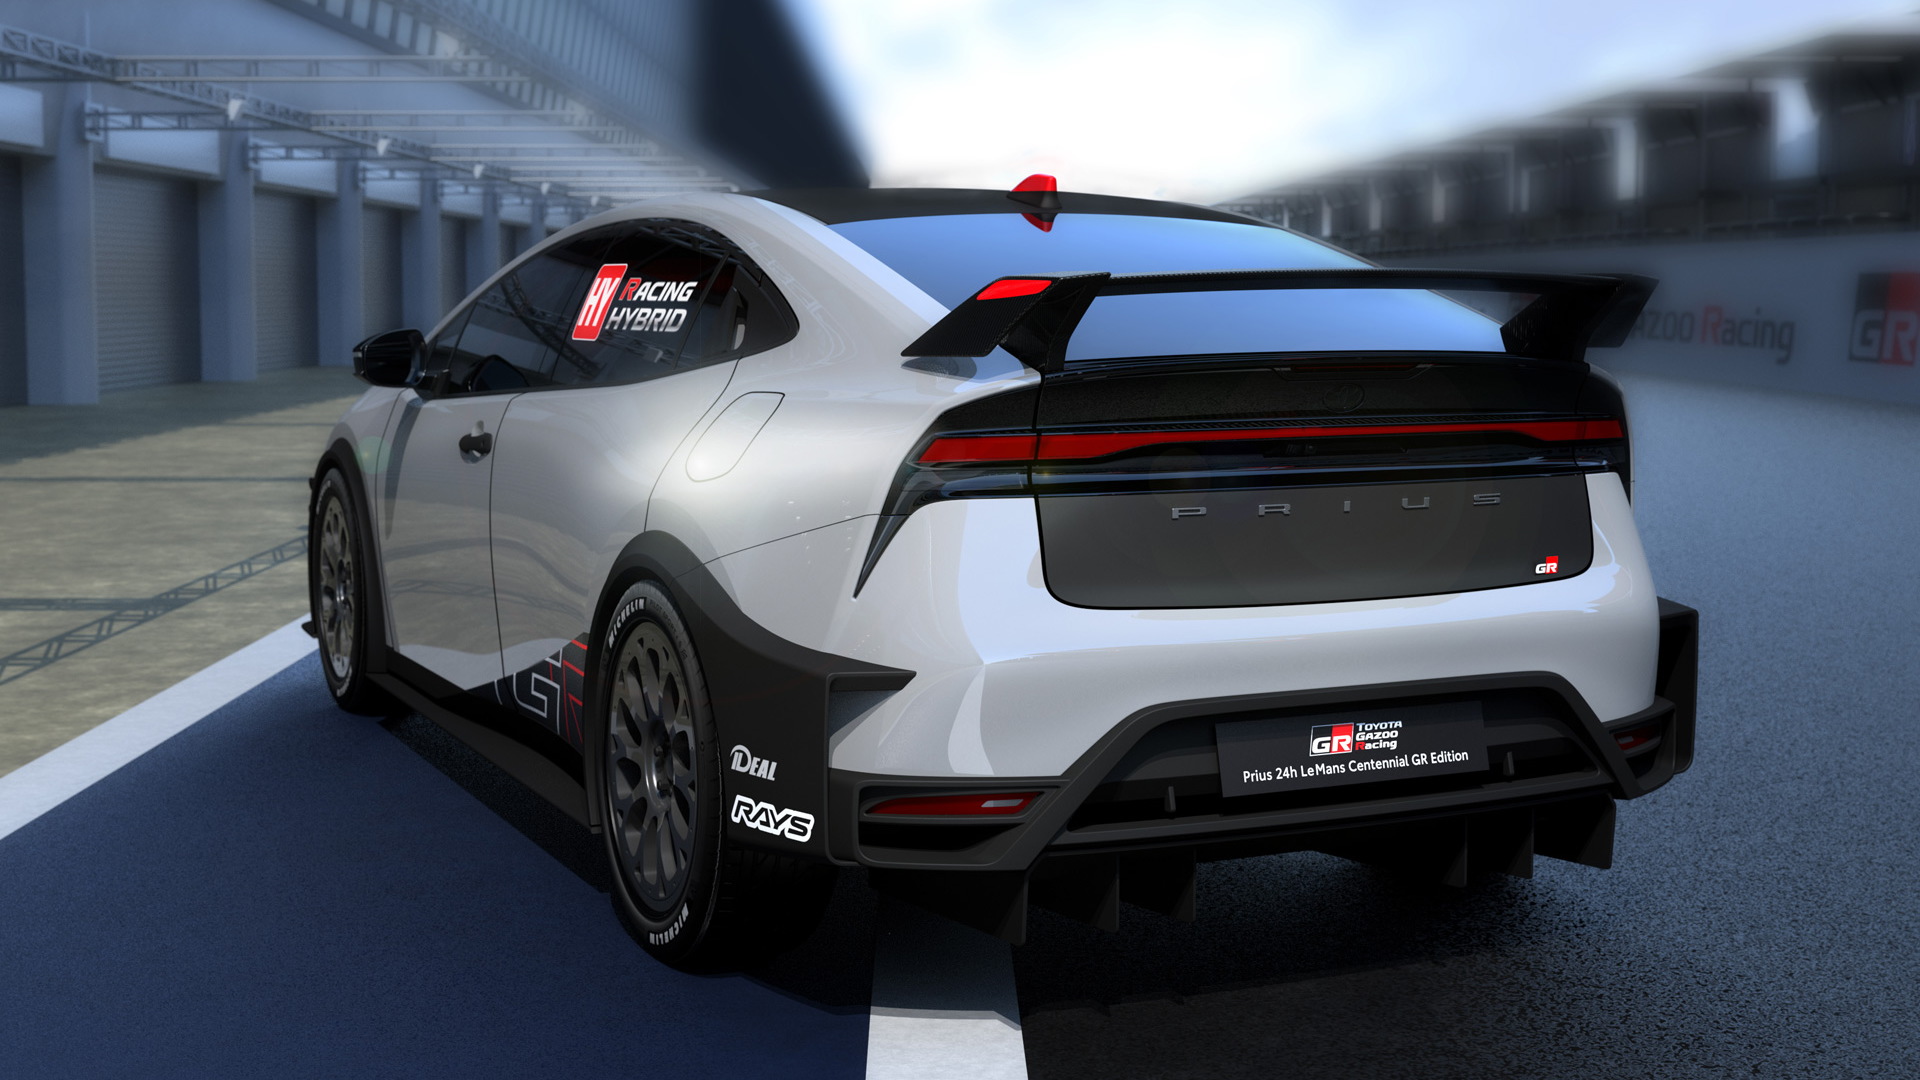 Toyota Prius 24h Le Mans Centennial GR Edition concept